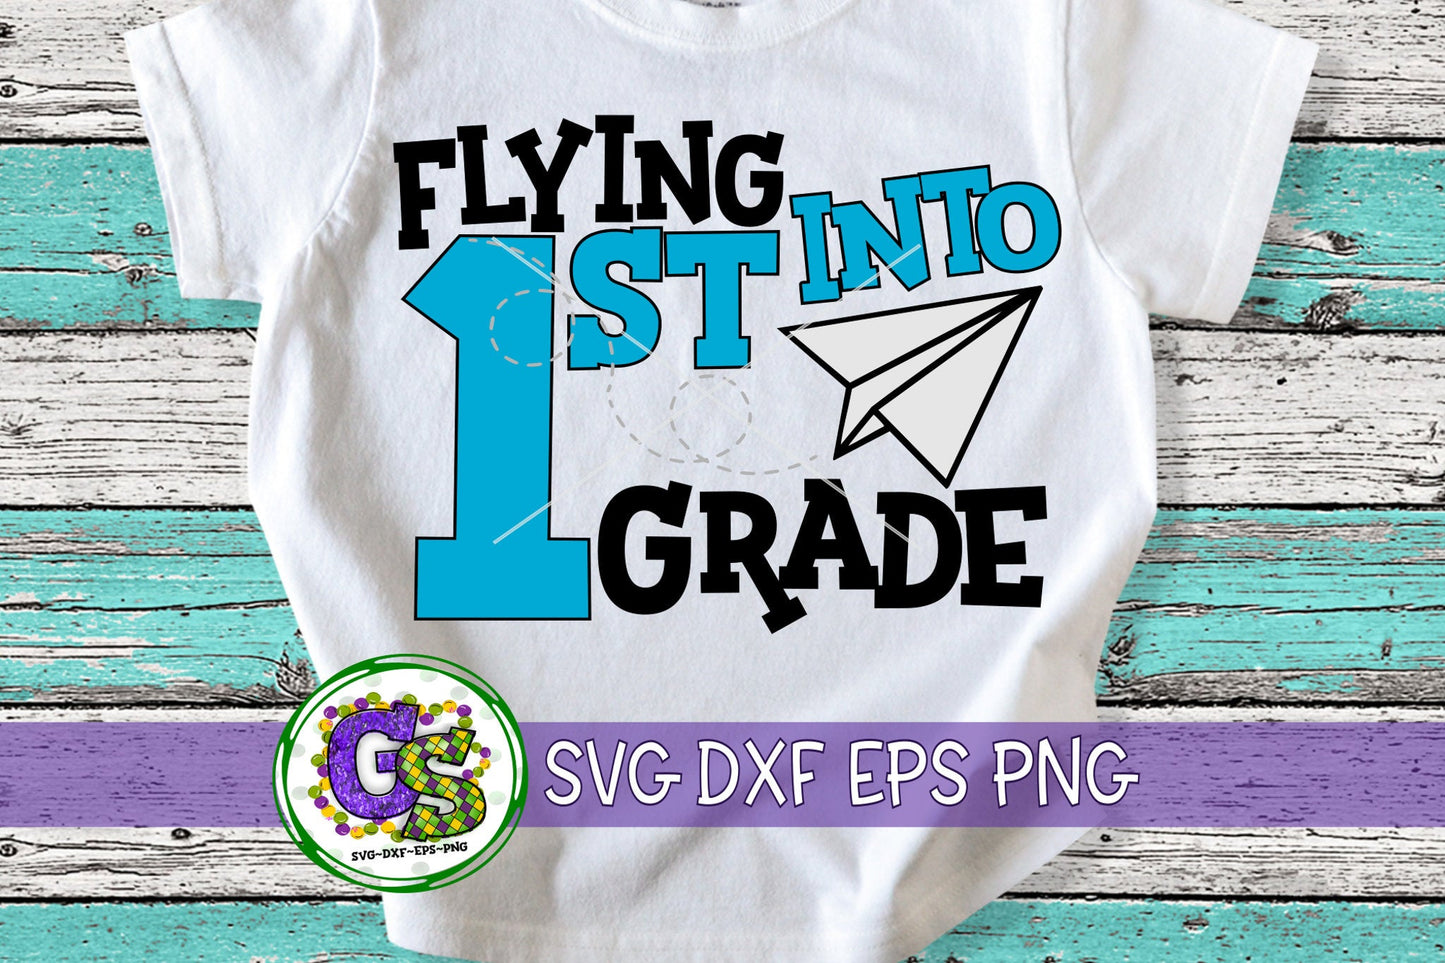 Flying Into 1st Grade svg dxf eps png. 1st Grade SvG | Back To School | School SVG | 1st Grade SvG | First grade | Instant Download Cut File